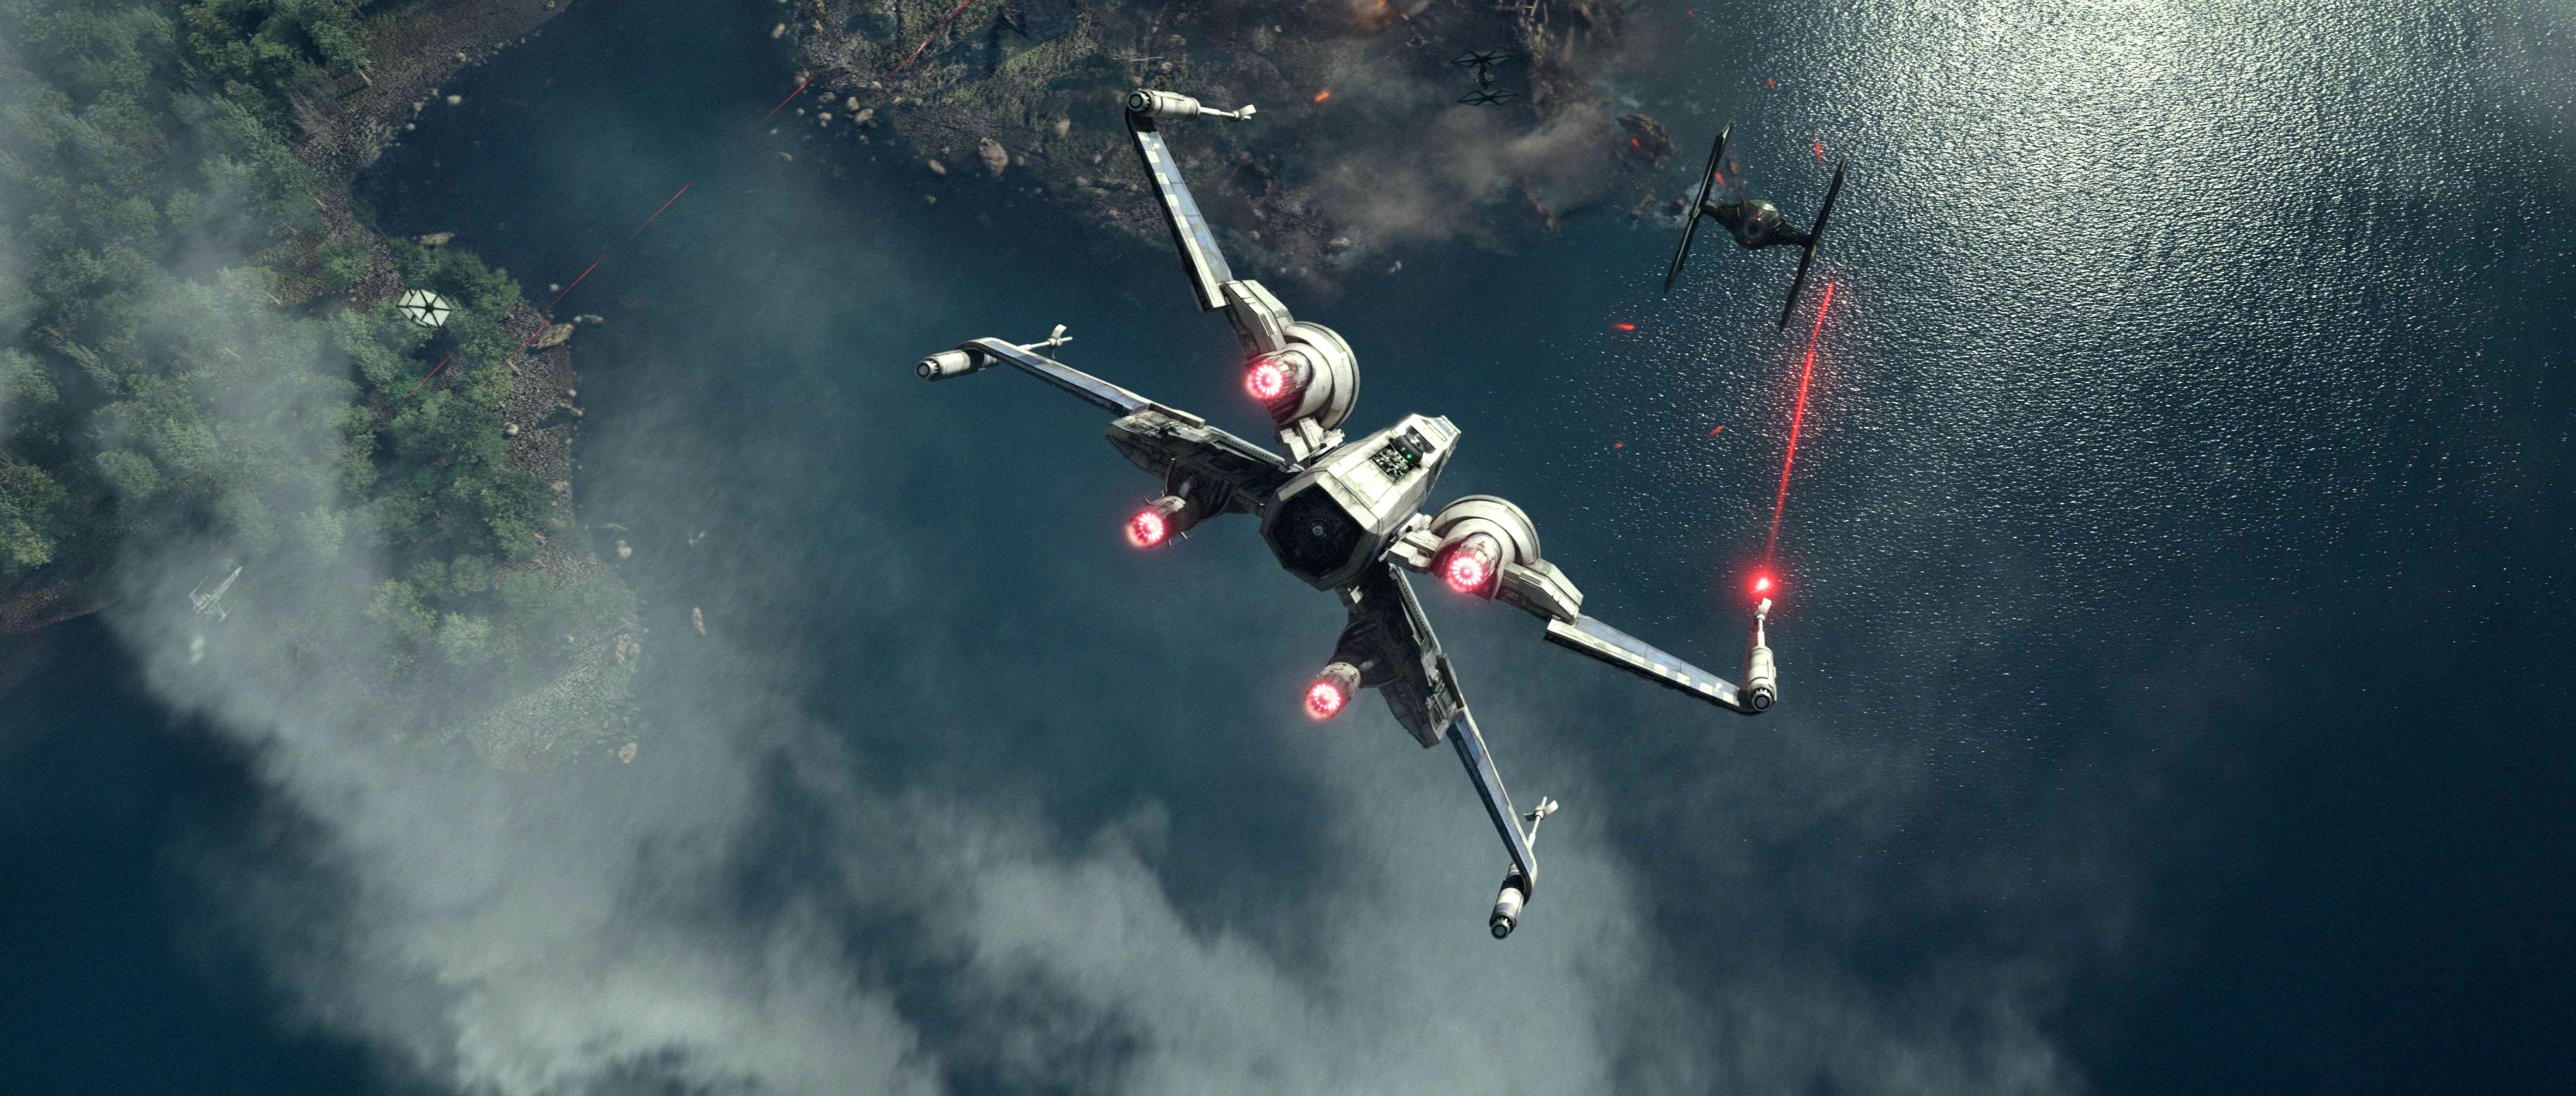 🔥 Download Star Wars Space Battle Wallpaper Image by @robertmoreno